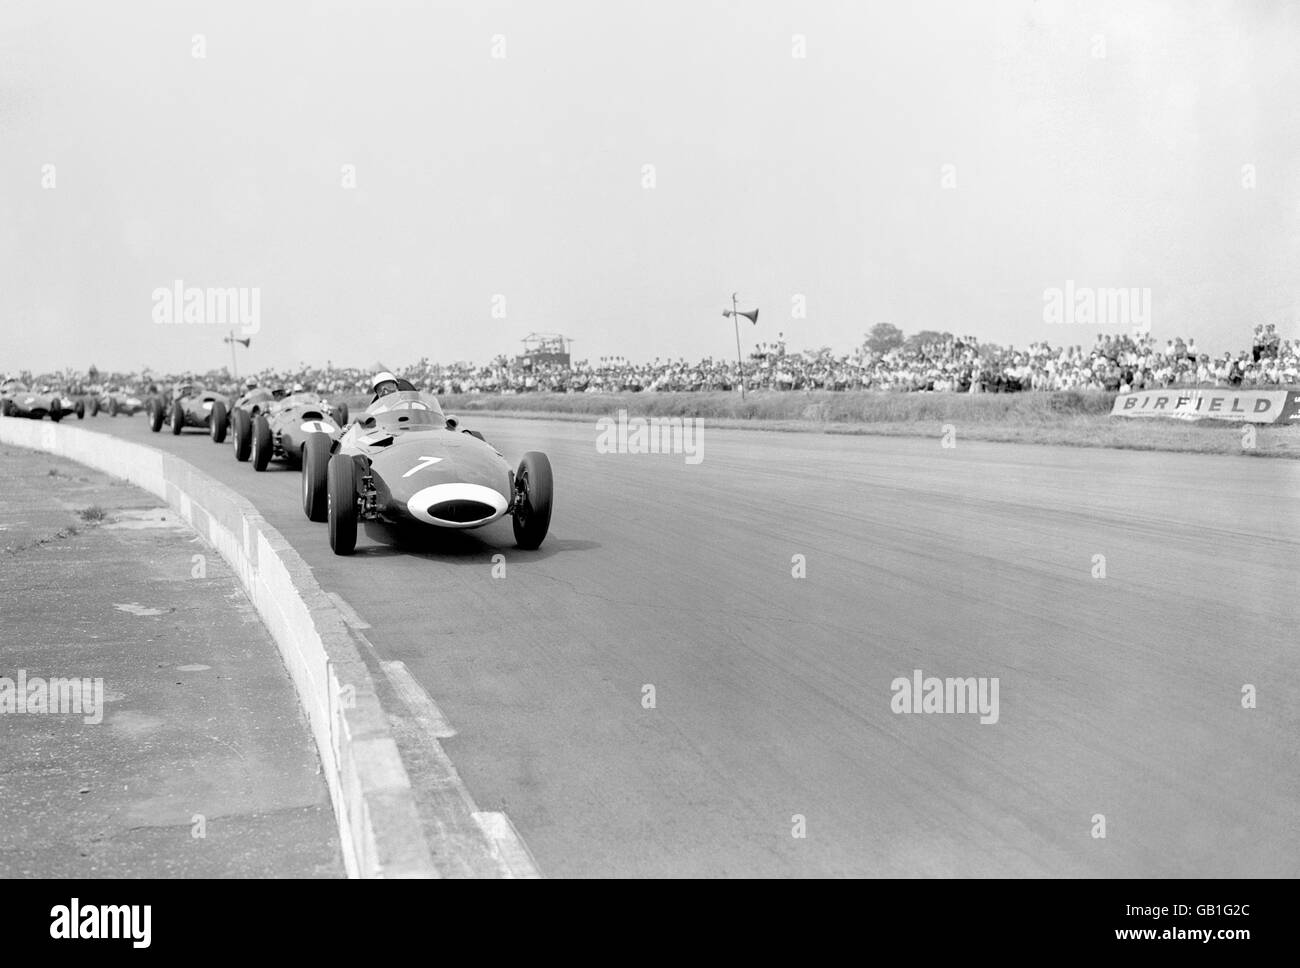 Formel 1 Motor - British Grand Prix - Rennen Silverstone 1958 Stockfoto